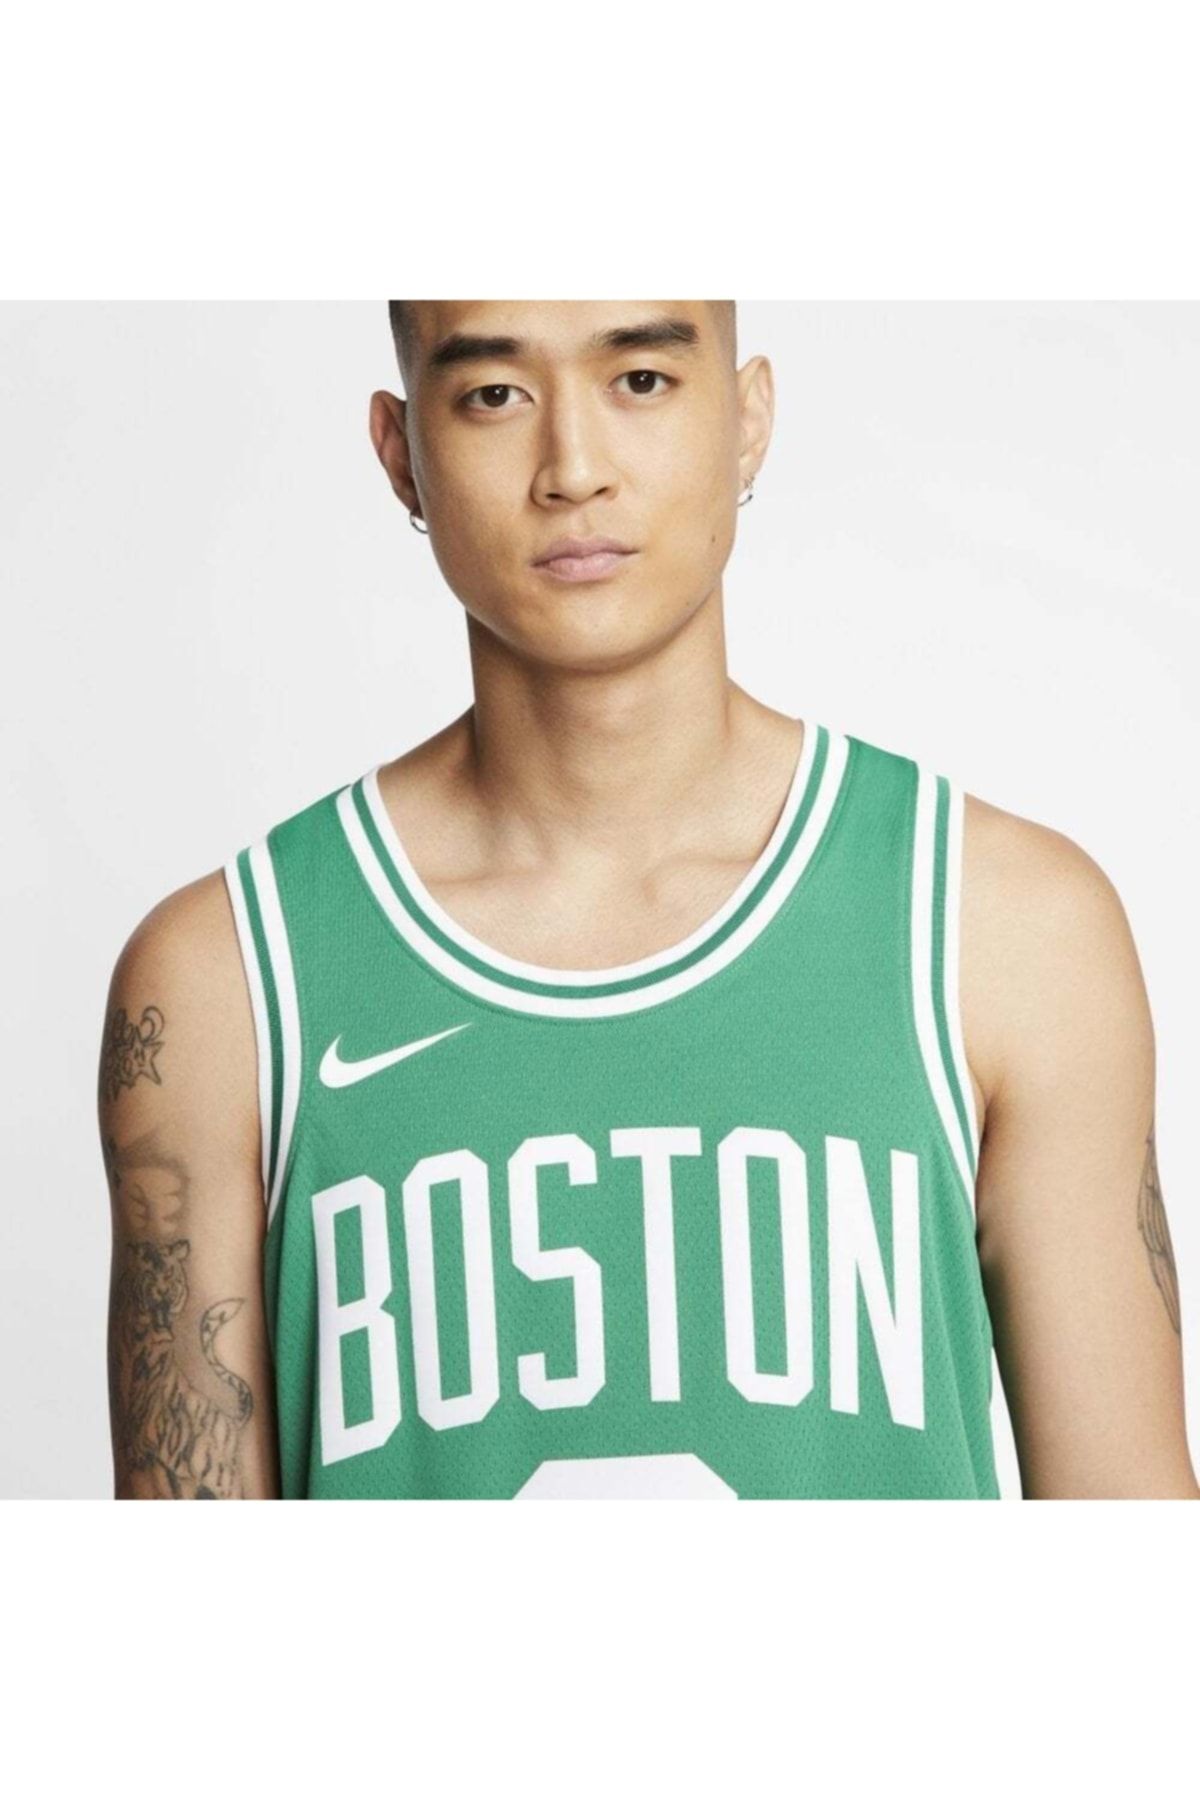 Kemba Walker Celtics Icon Edition 2020 Nike NBA Authentic Jersey